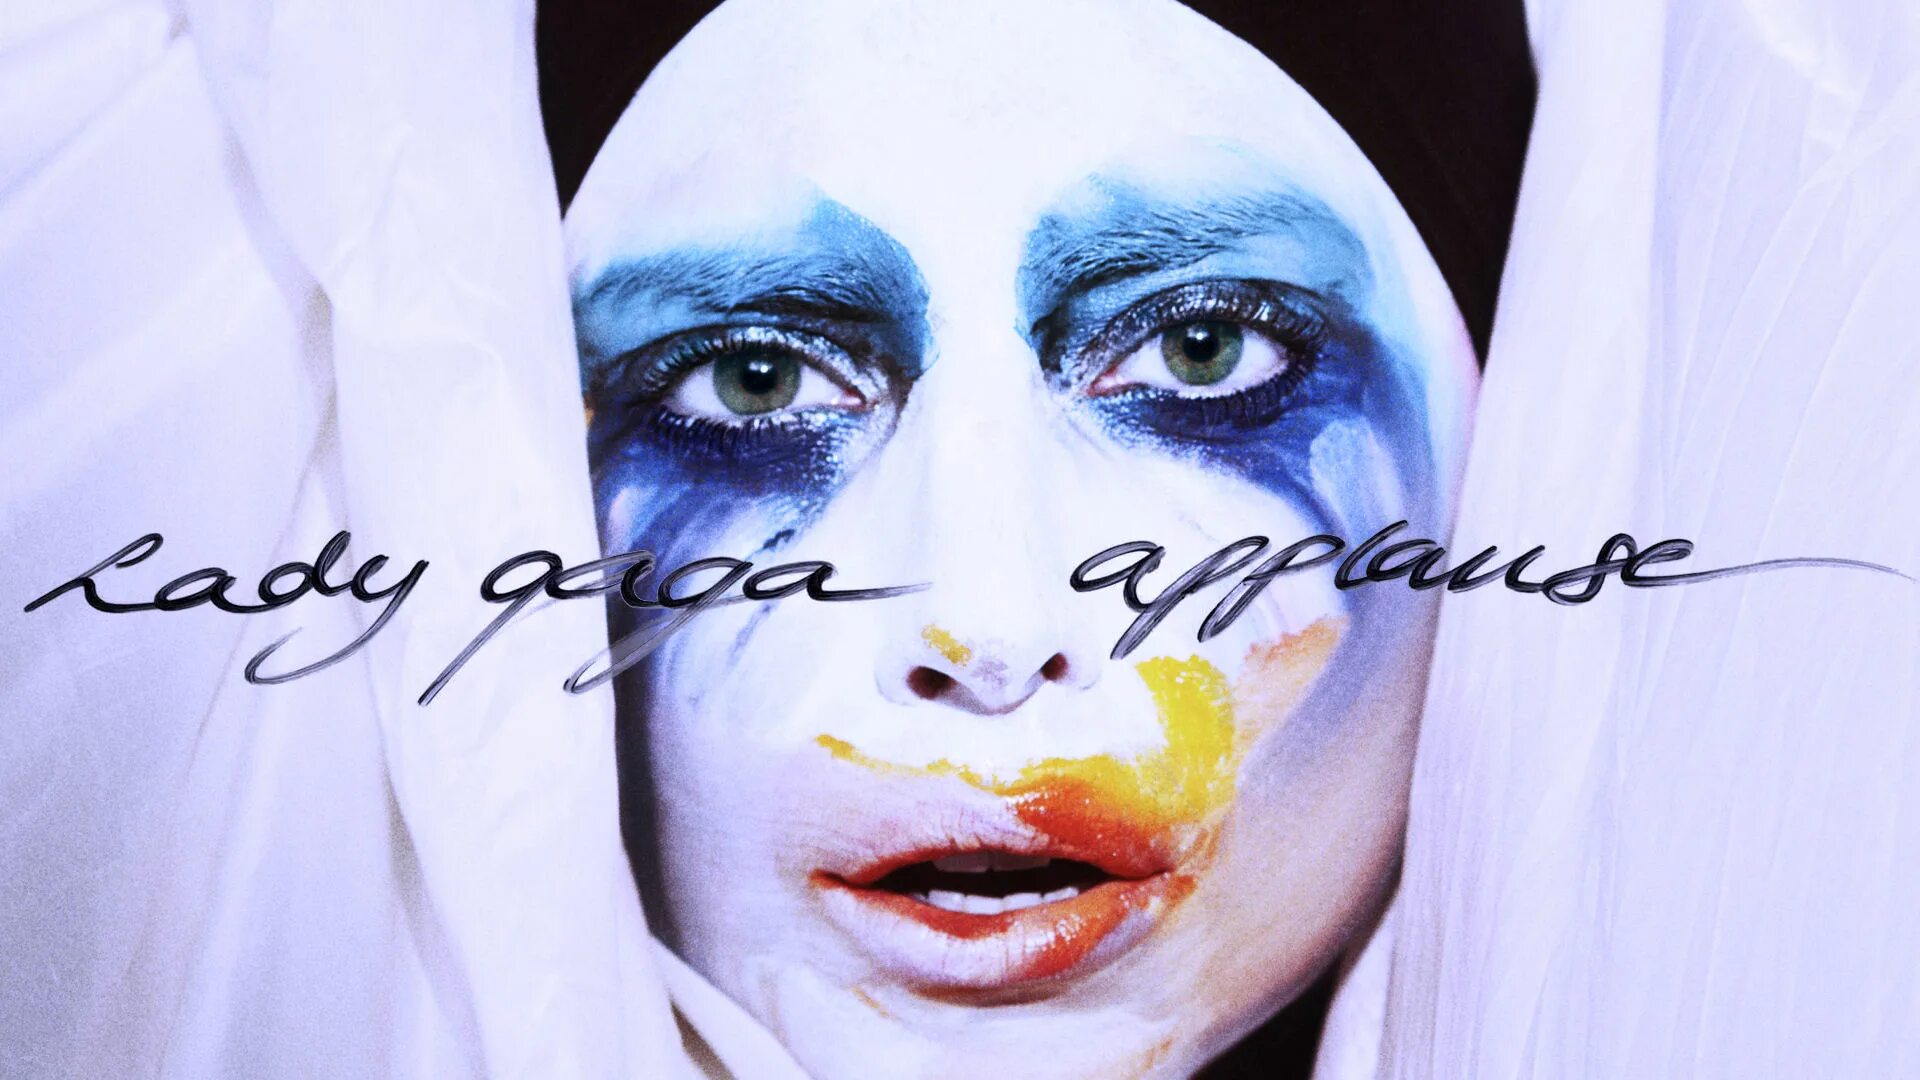 Леди Гага Applause. Lady Gaga Applause обложка. Lady Gaga Applause арт. Applause леди Гага рисунок. Applause леди гага